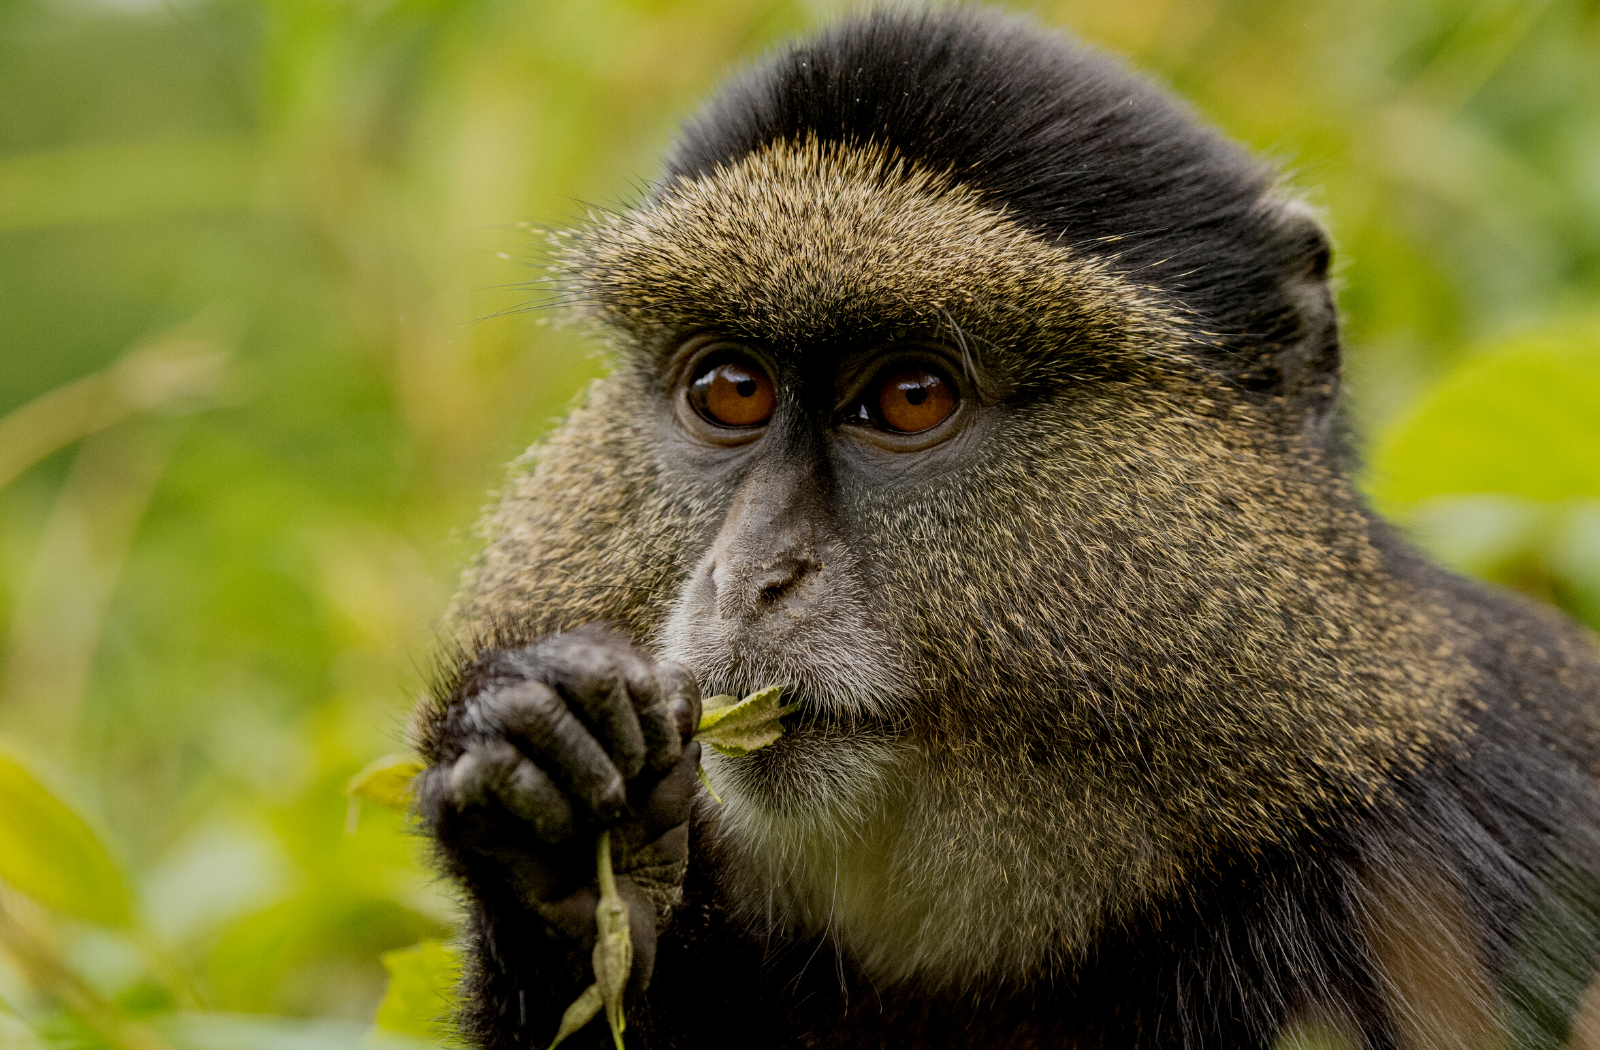 Golden monkey in Uganda